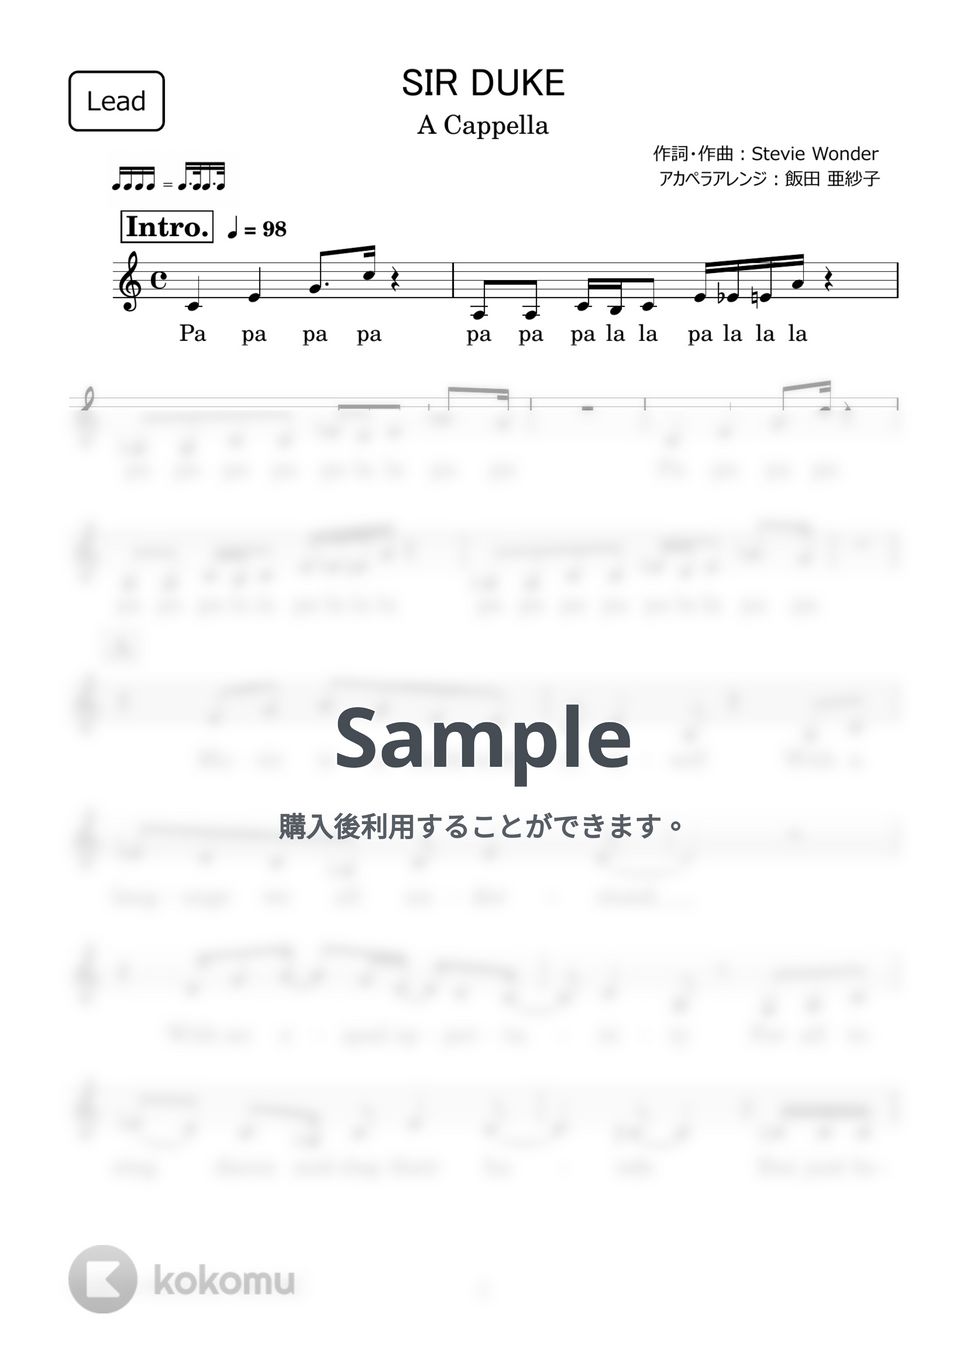 Stevie Wonder - SIR DUKE (アカペラ楽譜♪Leadパート譜) by 飯田 亜紗子